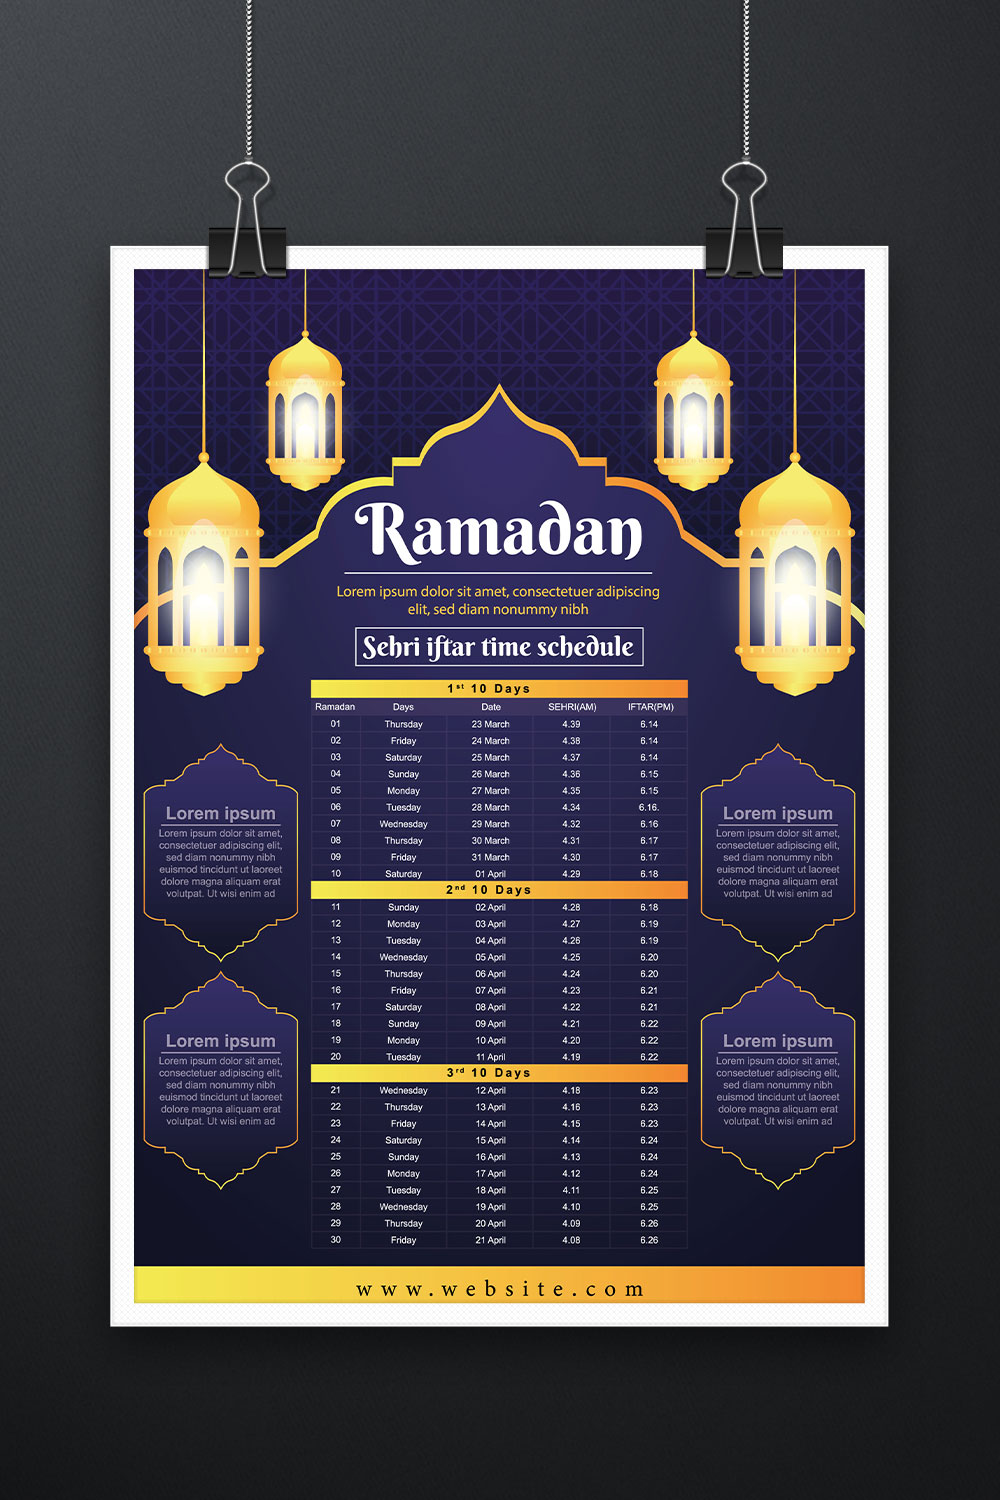 Ramadan Kareem Islamic calendar template and sehri ifter time schedule pinterest preview image.